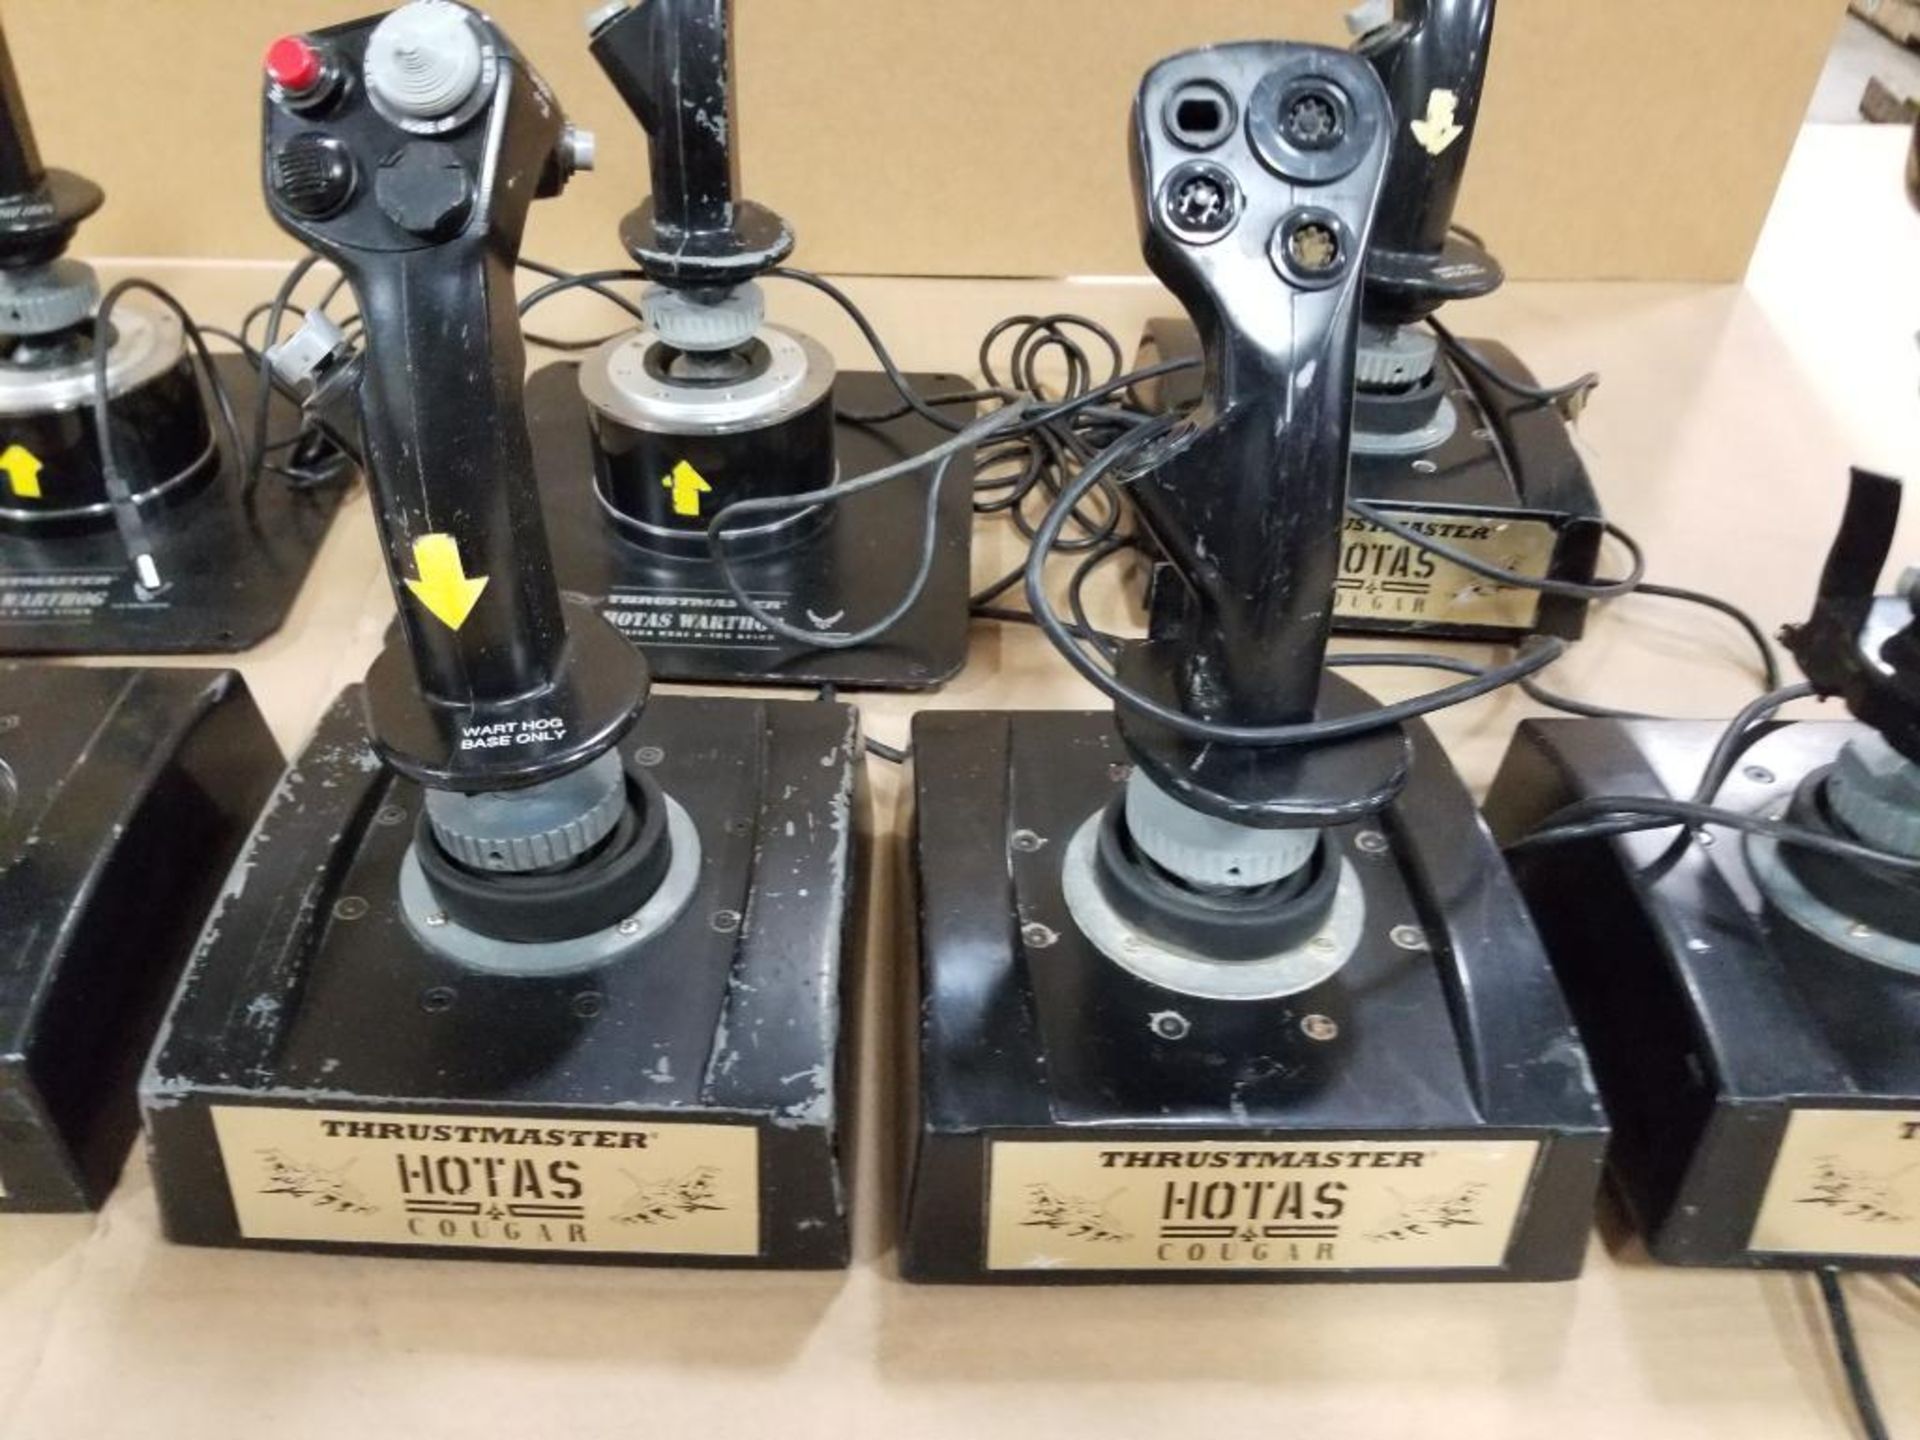 Assorted Thrustmaster Hotas Warthog joysticks. - Image 2 of 6